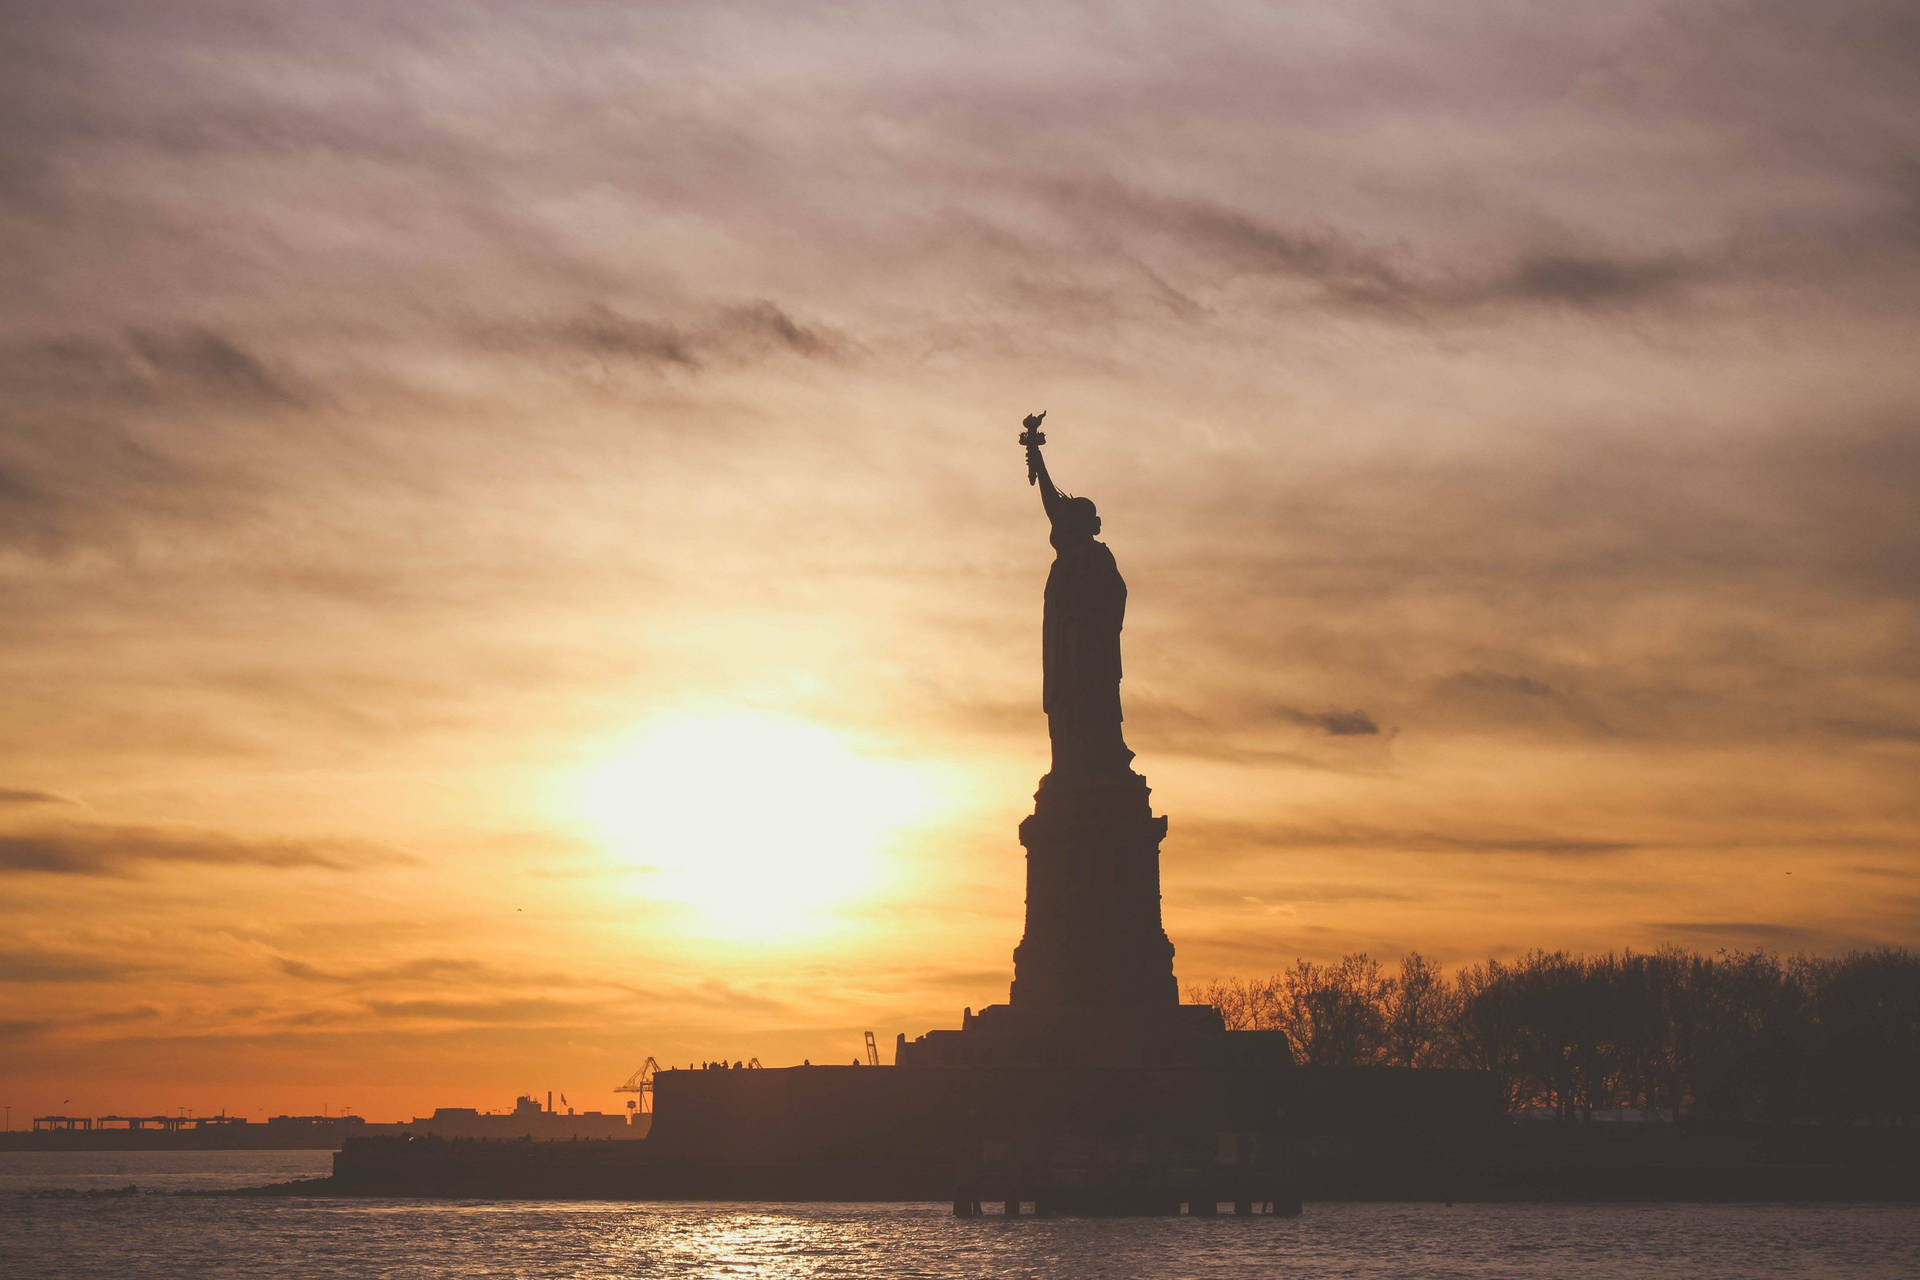 Statue Of Liberty Sunset Wallpaper